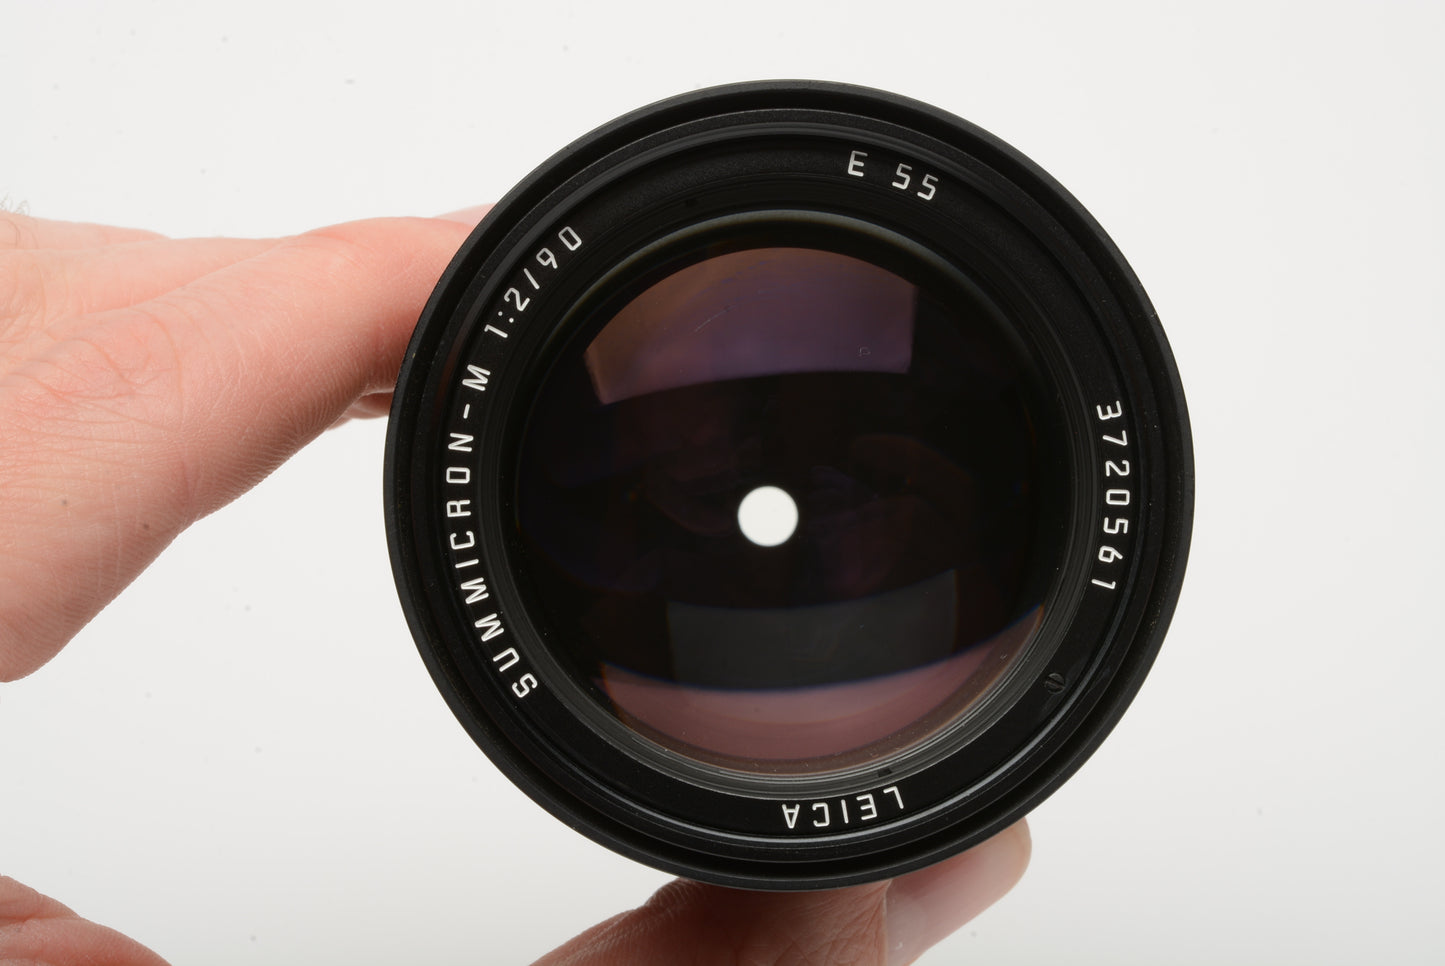 Leica Summicon-M 90mm F2 lens, case+caps+UV, very clean and sharp E55